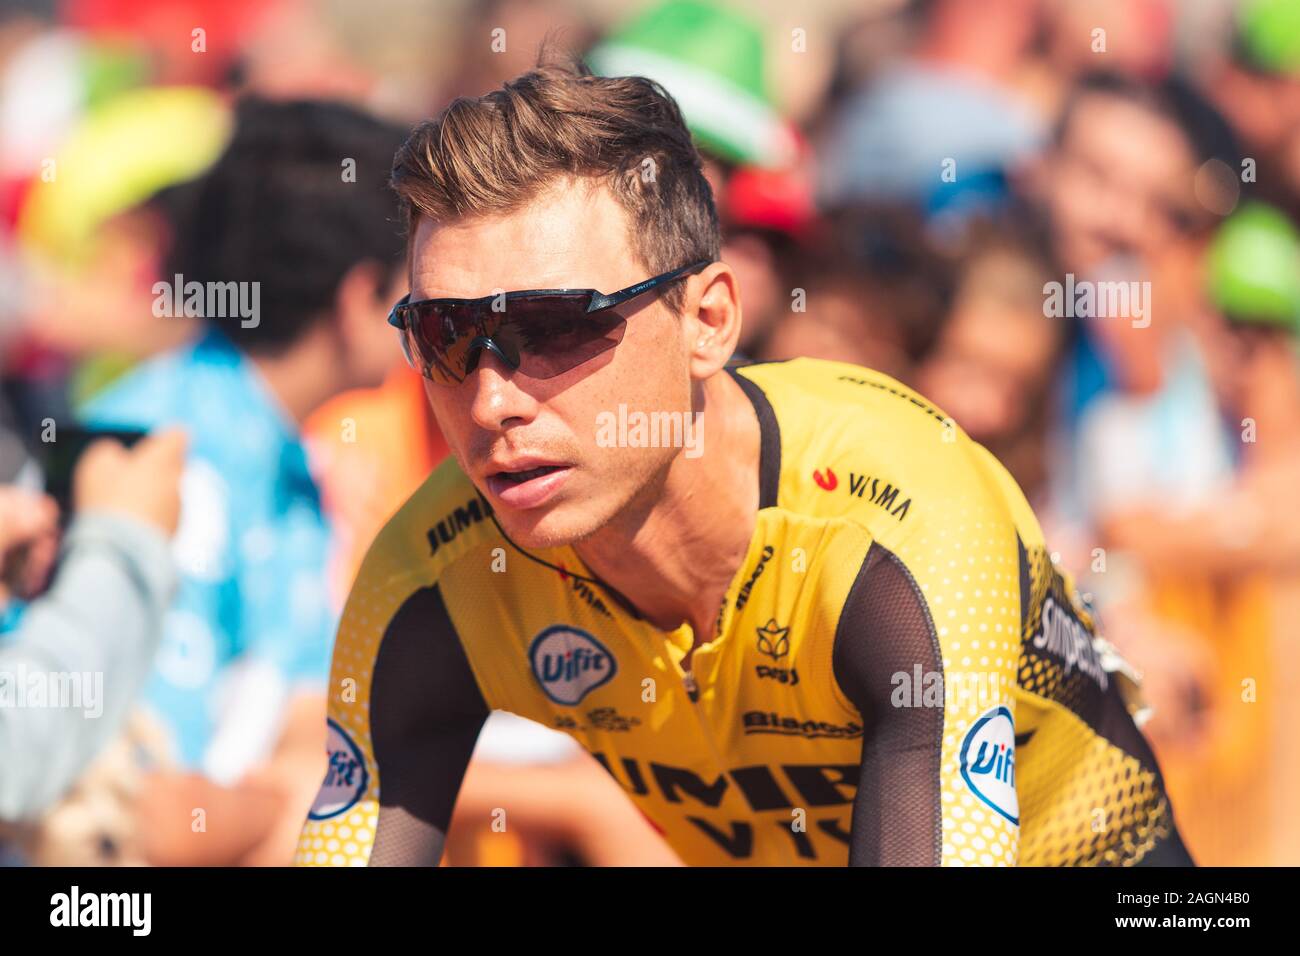 San Vicente de la Barquera, Spain-September 7, 2019: Tony MARTIN, cyclist of the Jumbo-Visma Team during stage 14 of La Vuelta a España. Stock Photo